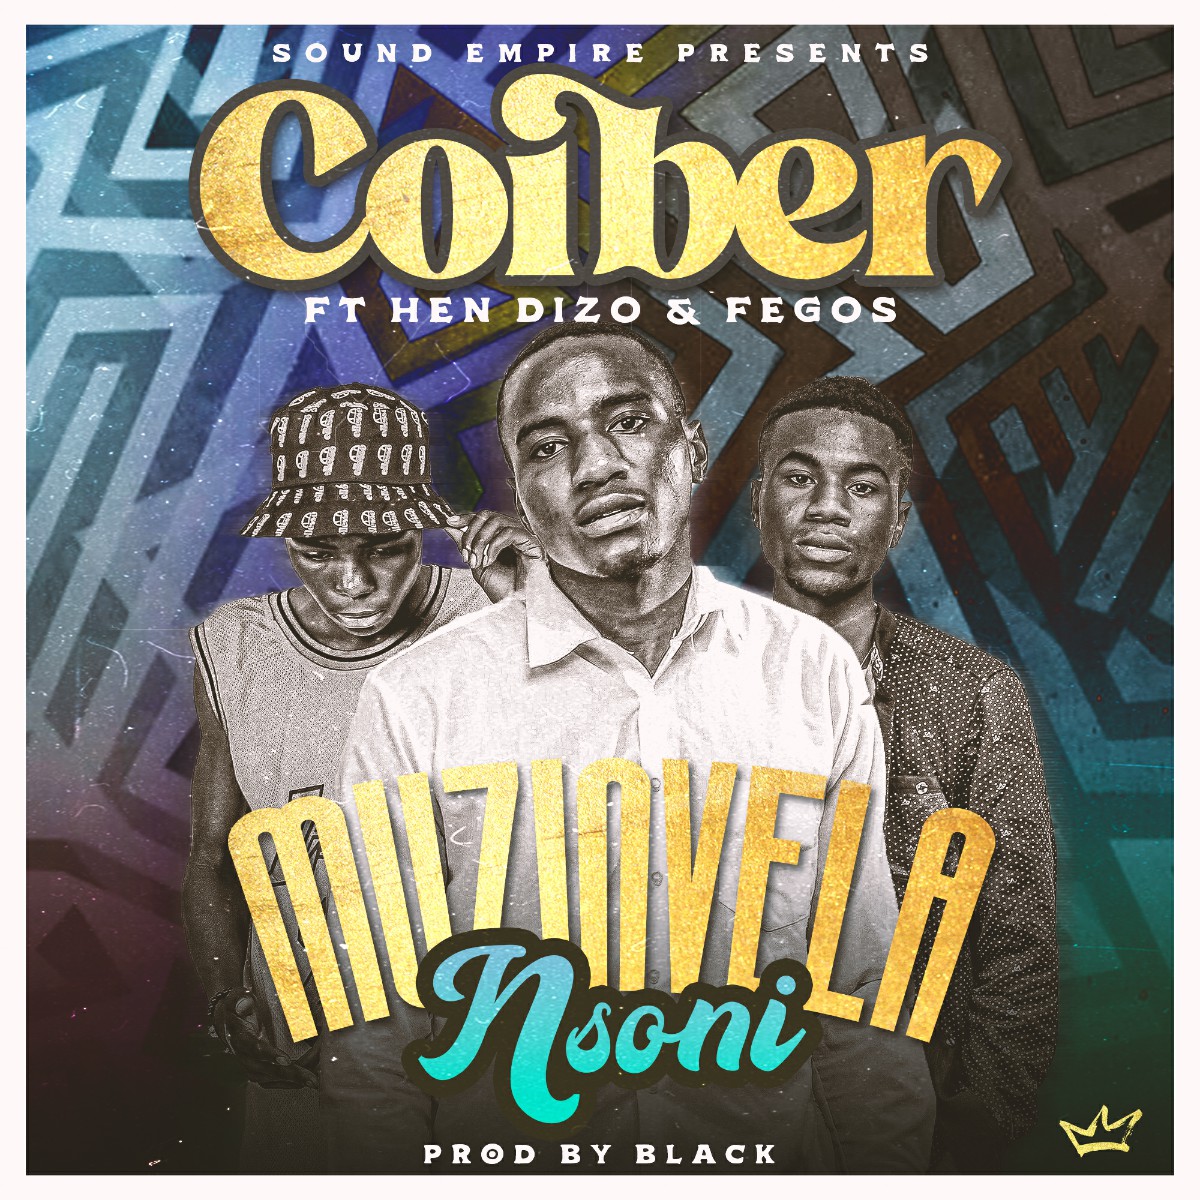 Coiber Jr ft. Hen Dizo & Fegos - Muzinvela Nsoni